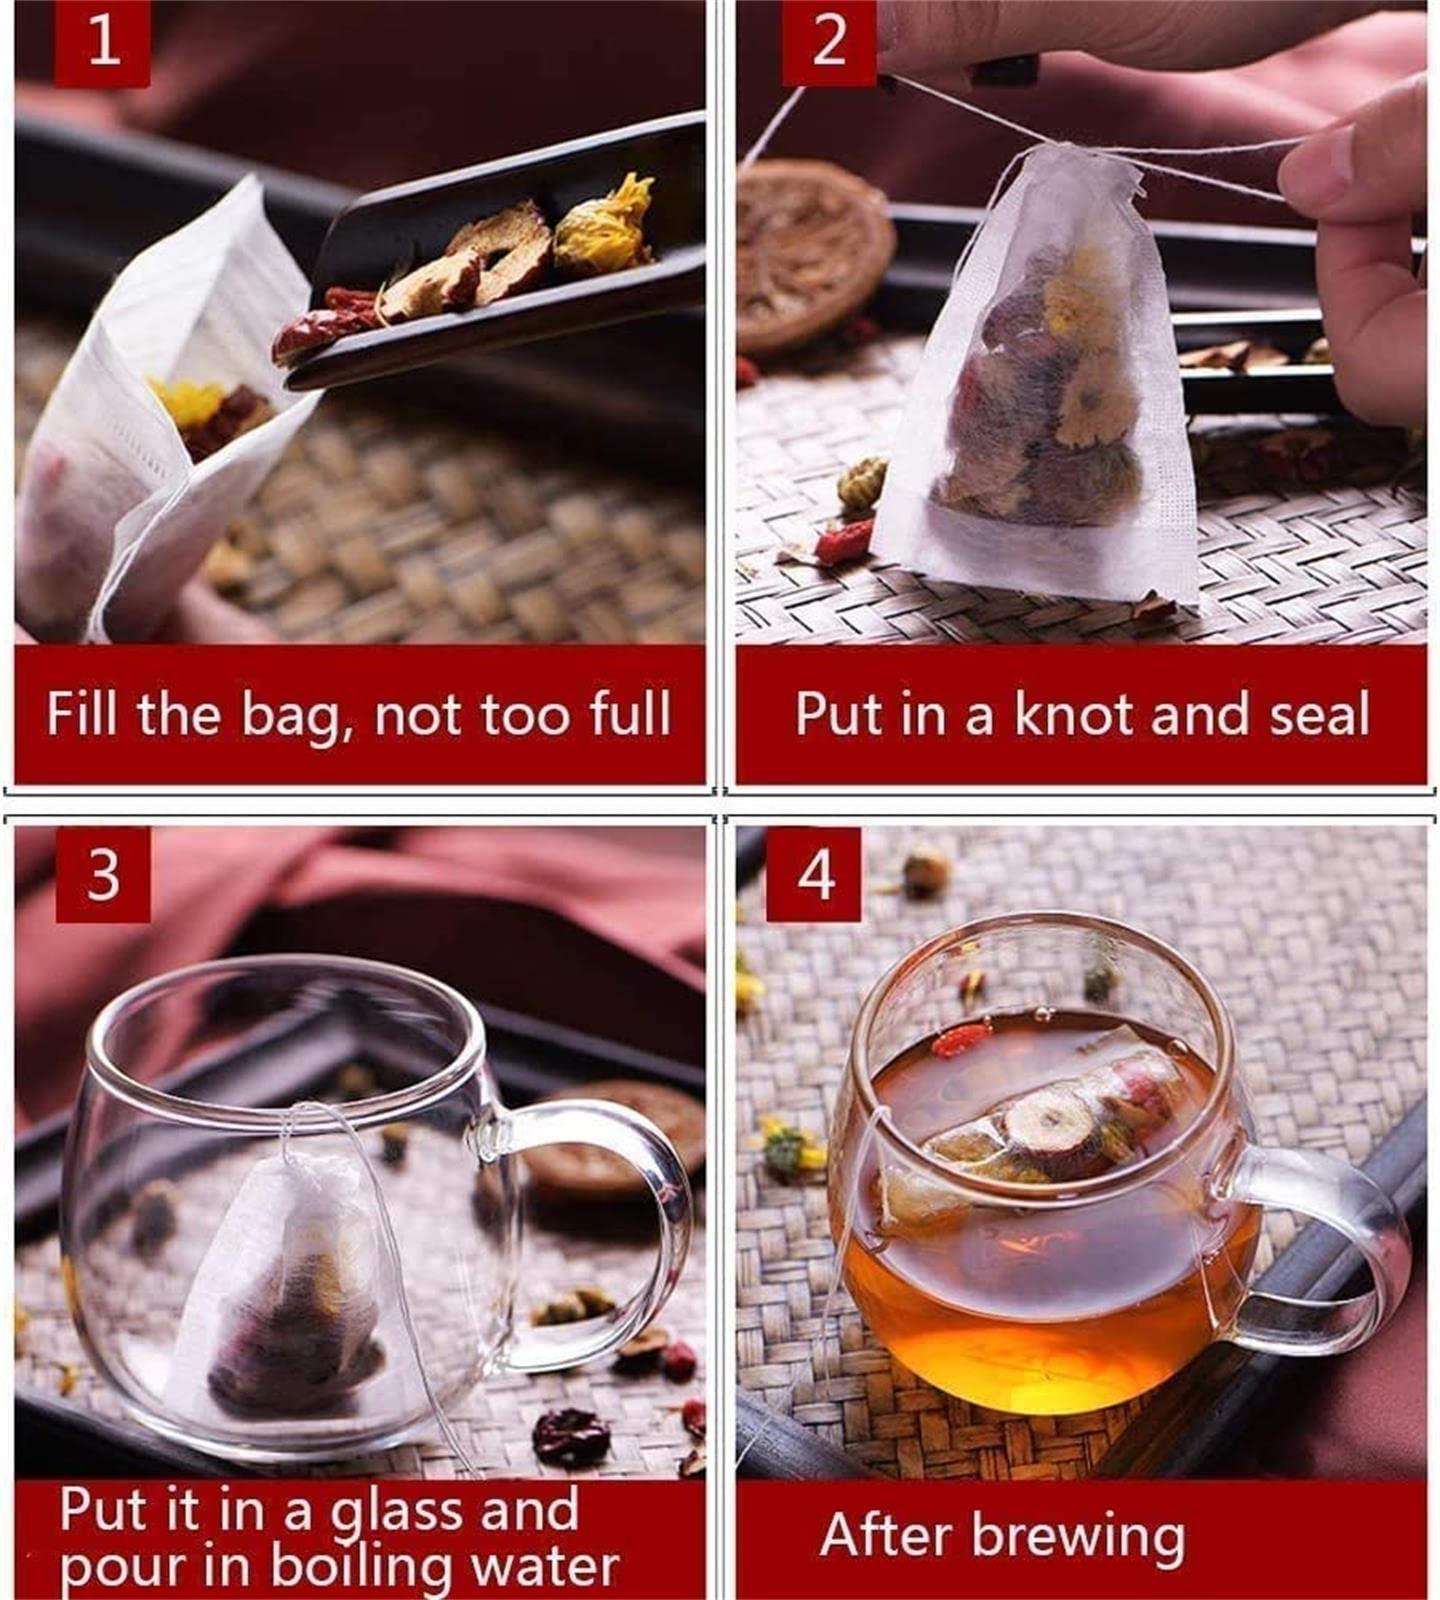 200PCS Tea Filter Bags, Tea Bags for Loose Leaf Tea Safe & Natural Material, Disposable Tea Infuser for Loose Leaf Tea, Coffee, Spice, Herbs